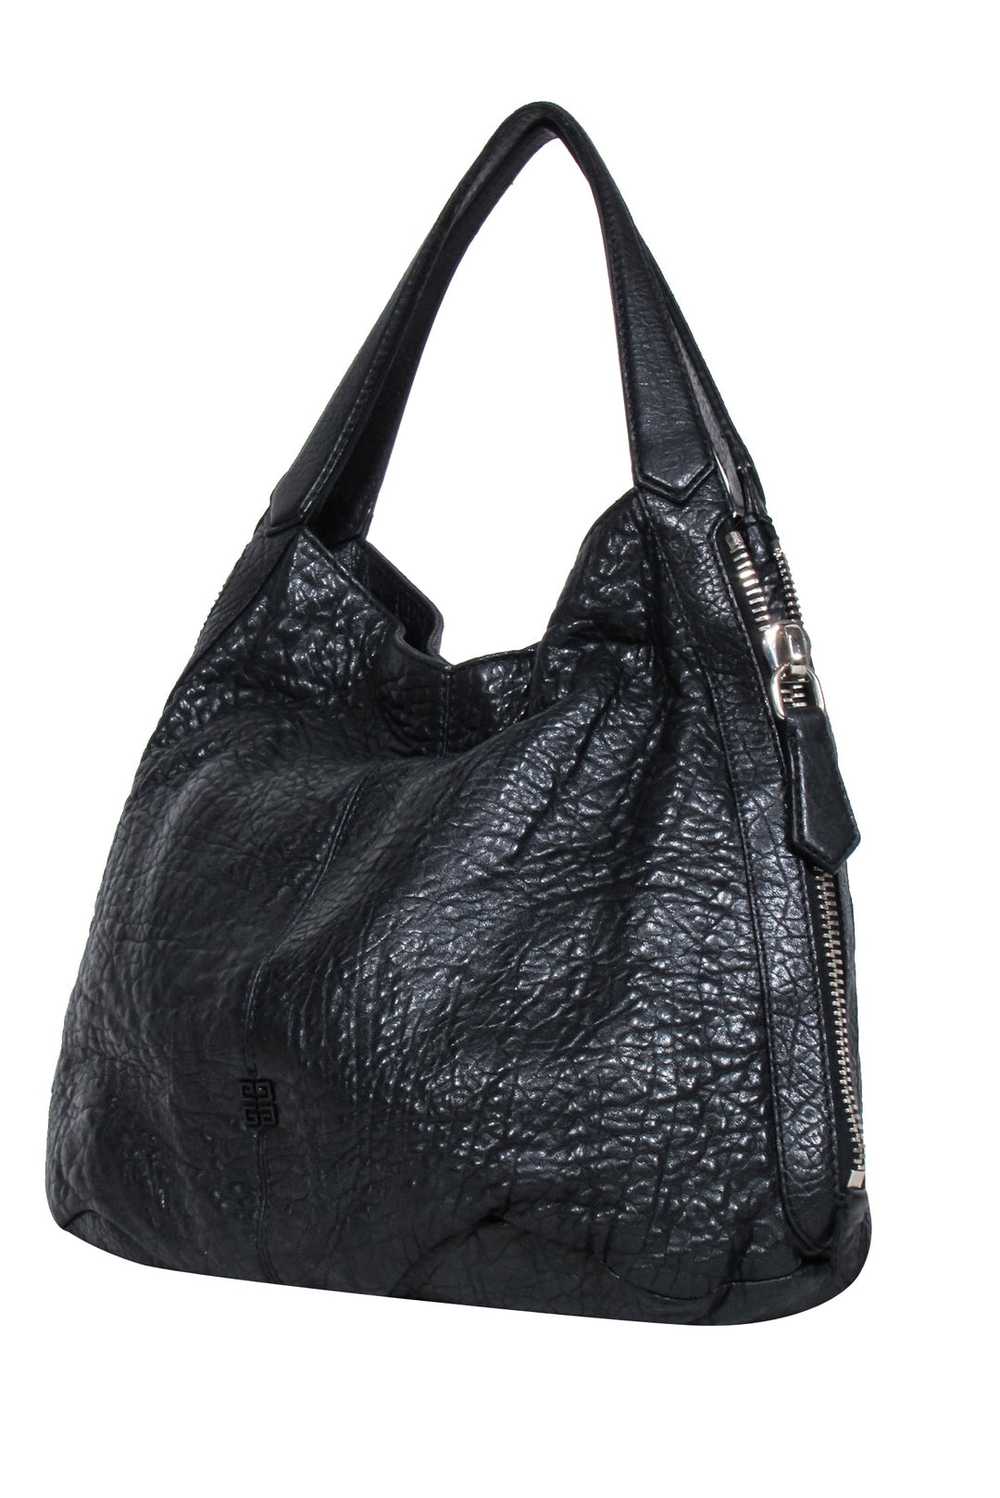 Givenchy - Black Leather Hobo Bag - image 2